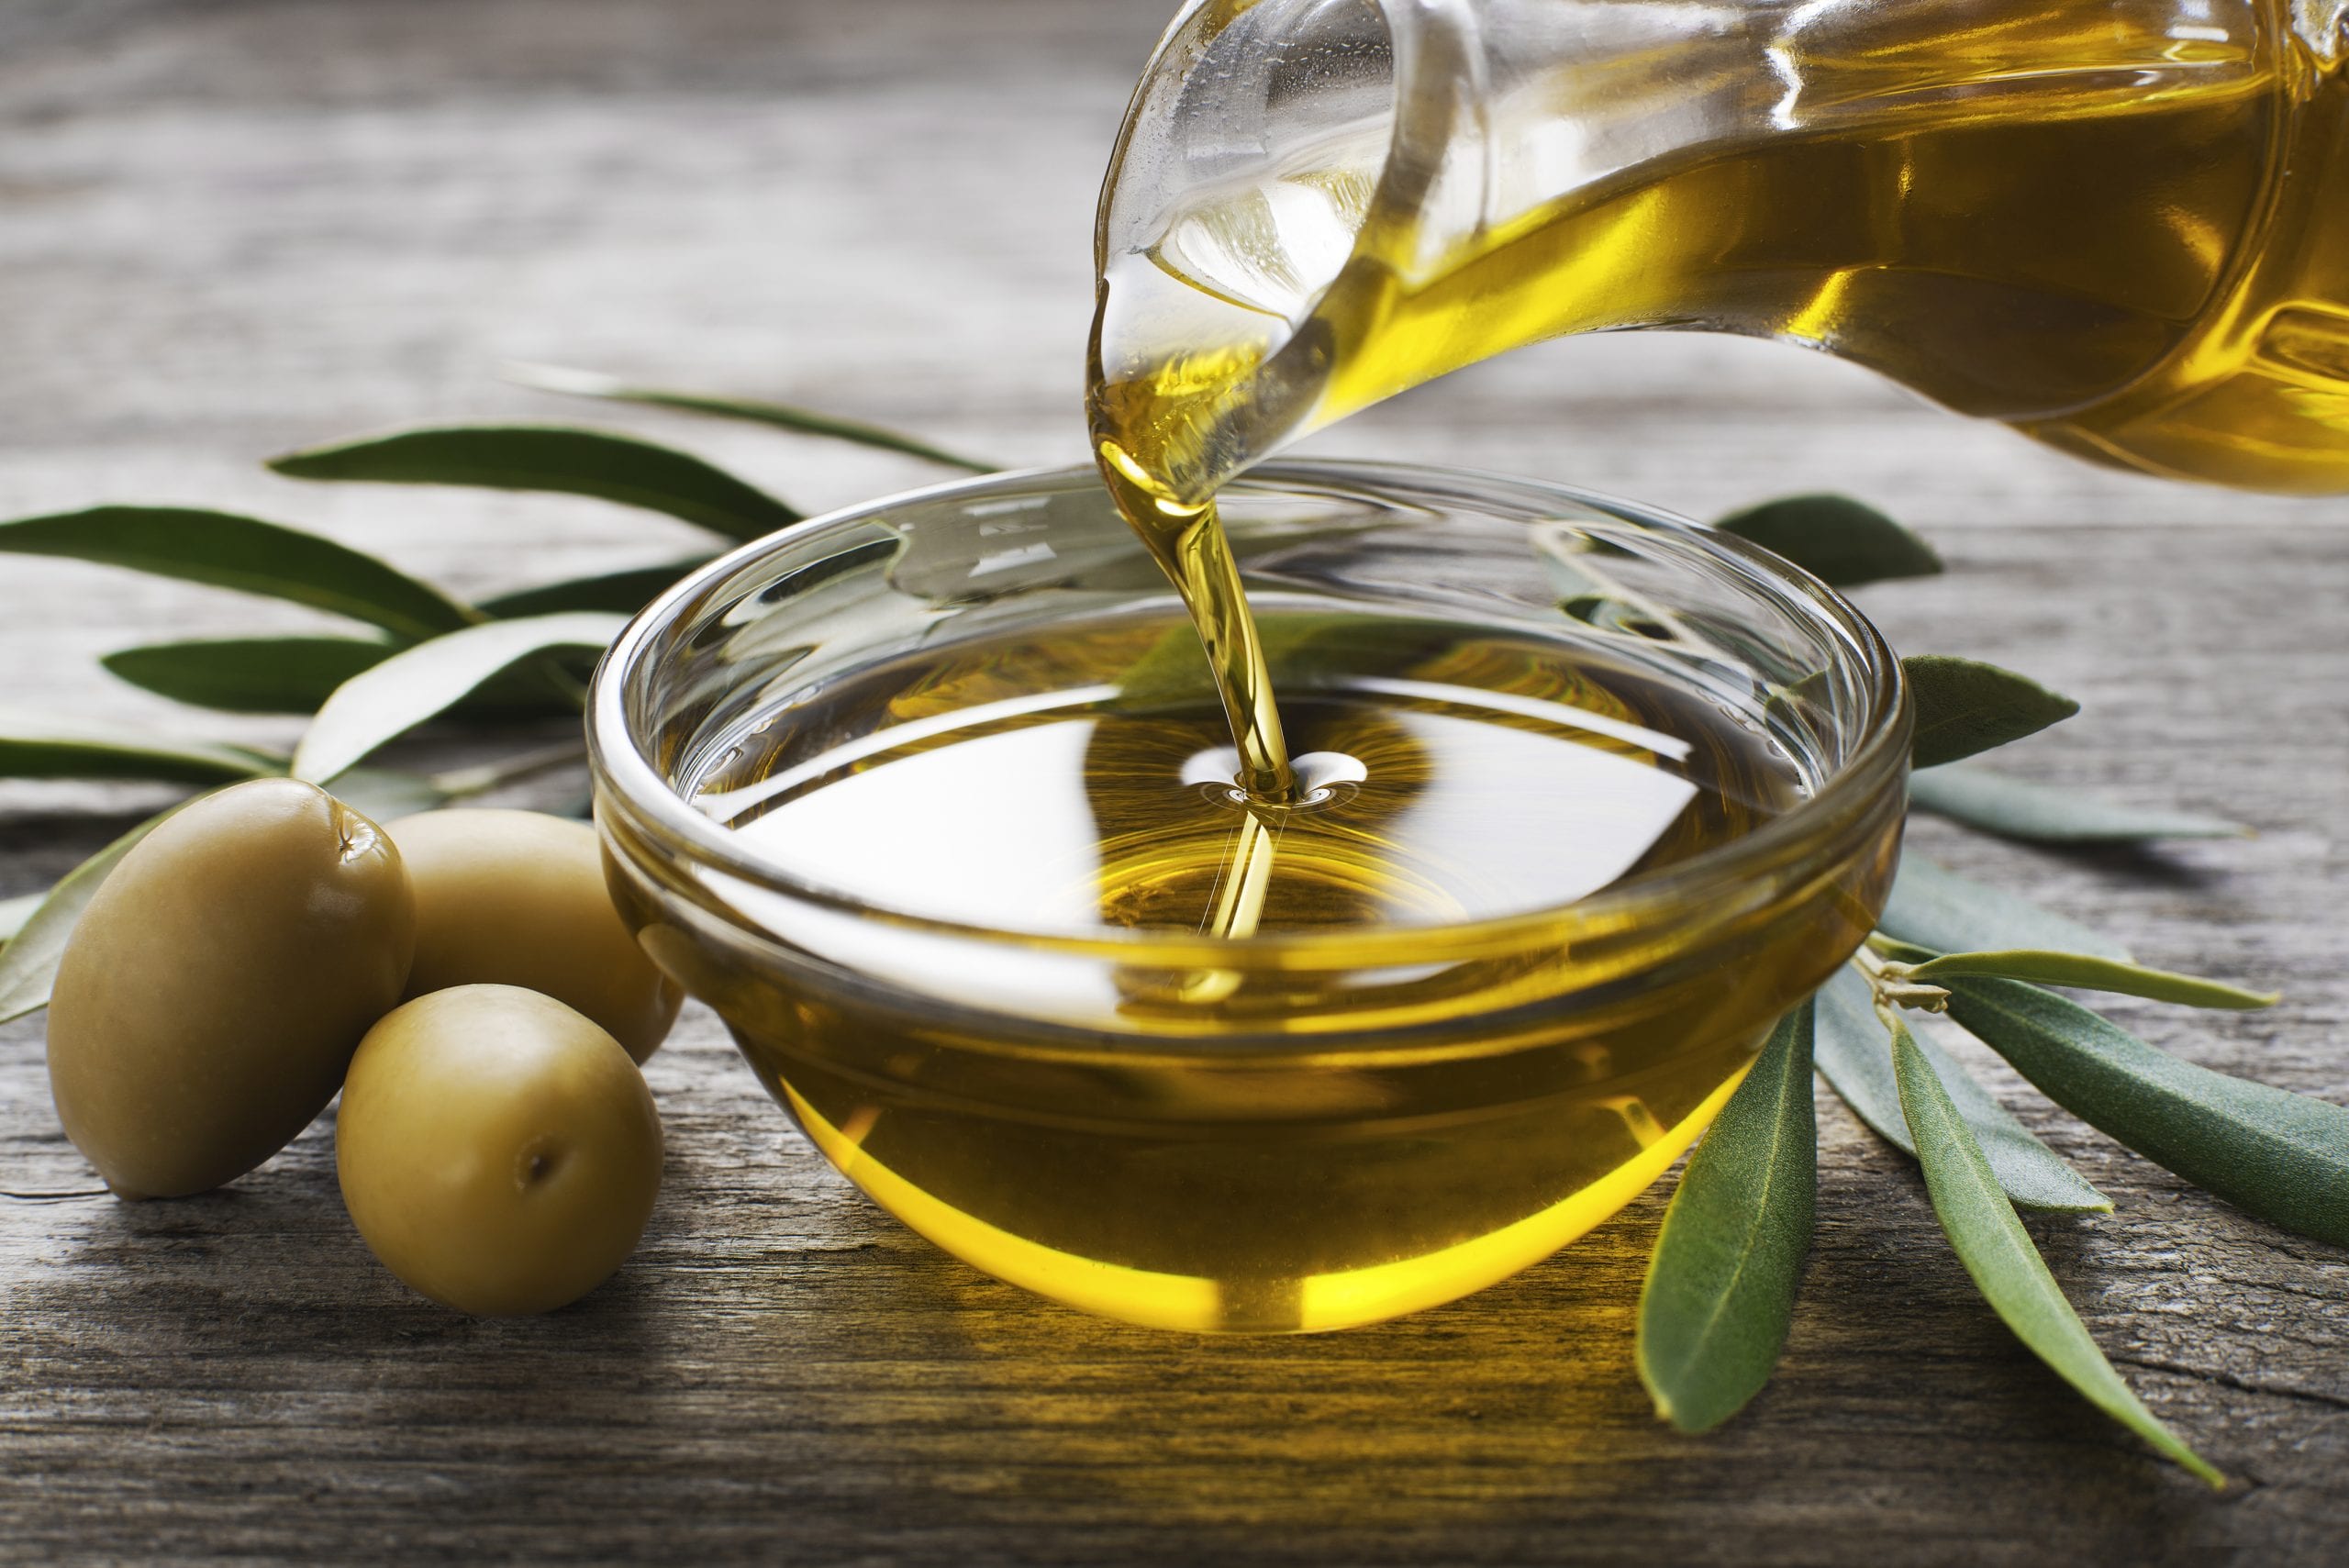 Les meilleures huiles d'olive extra vierge 2020 de Campanie - Gambero Rosso